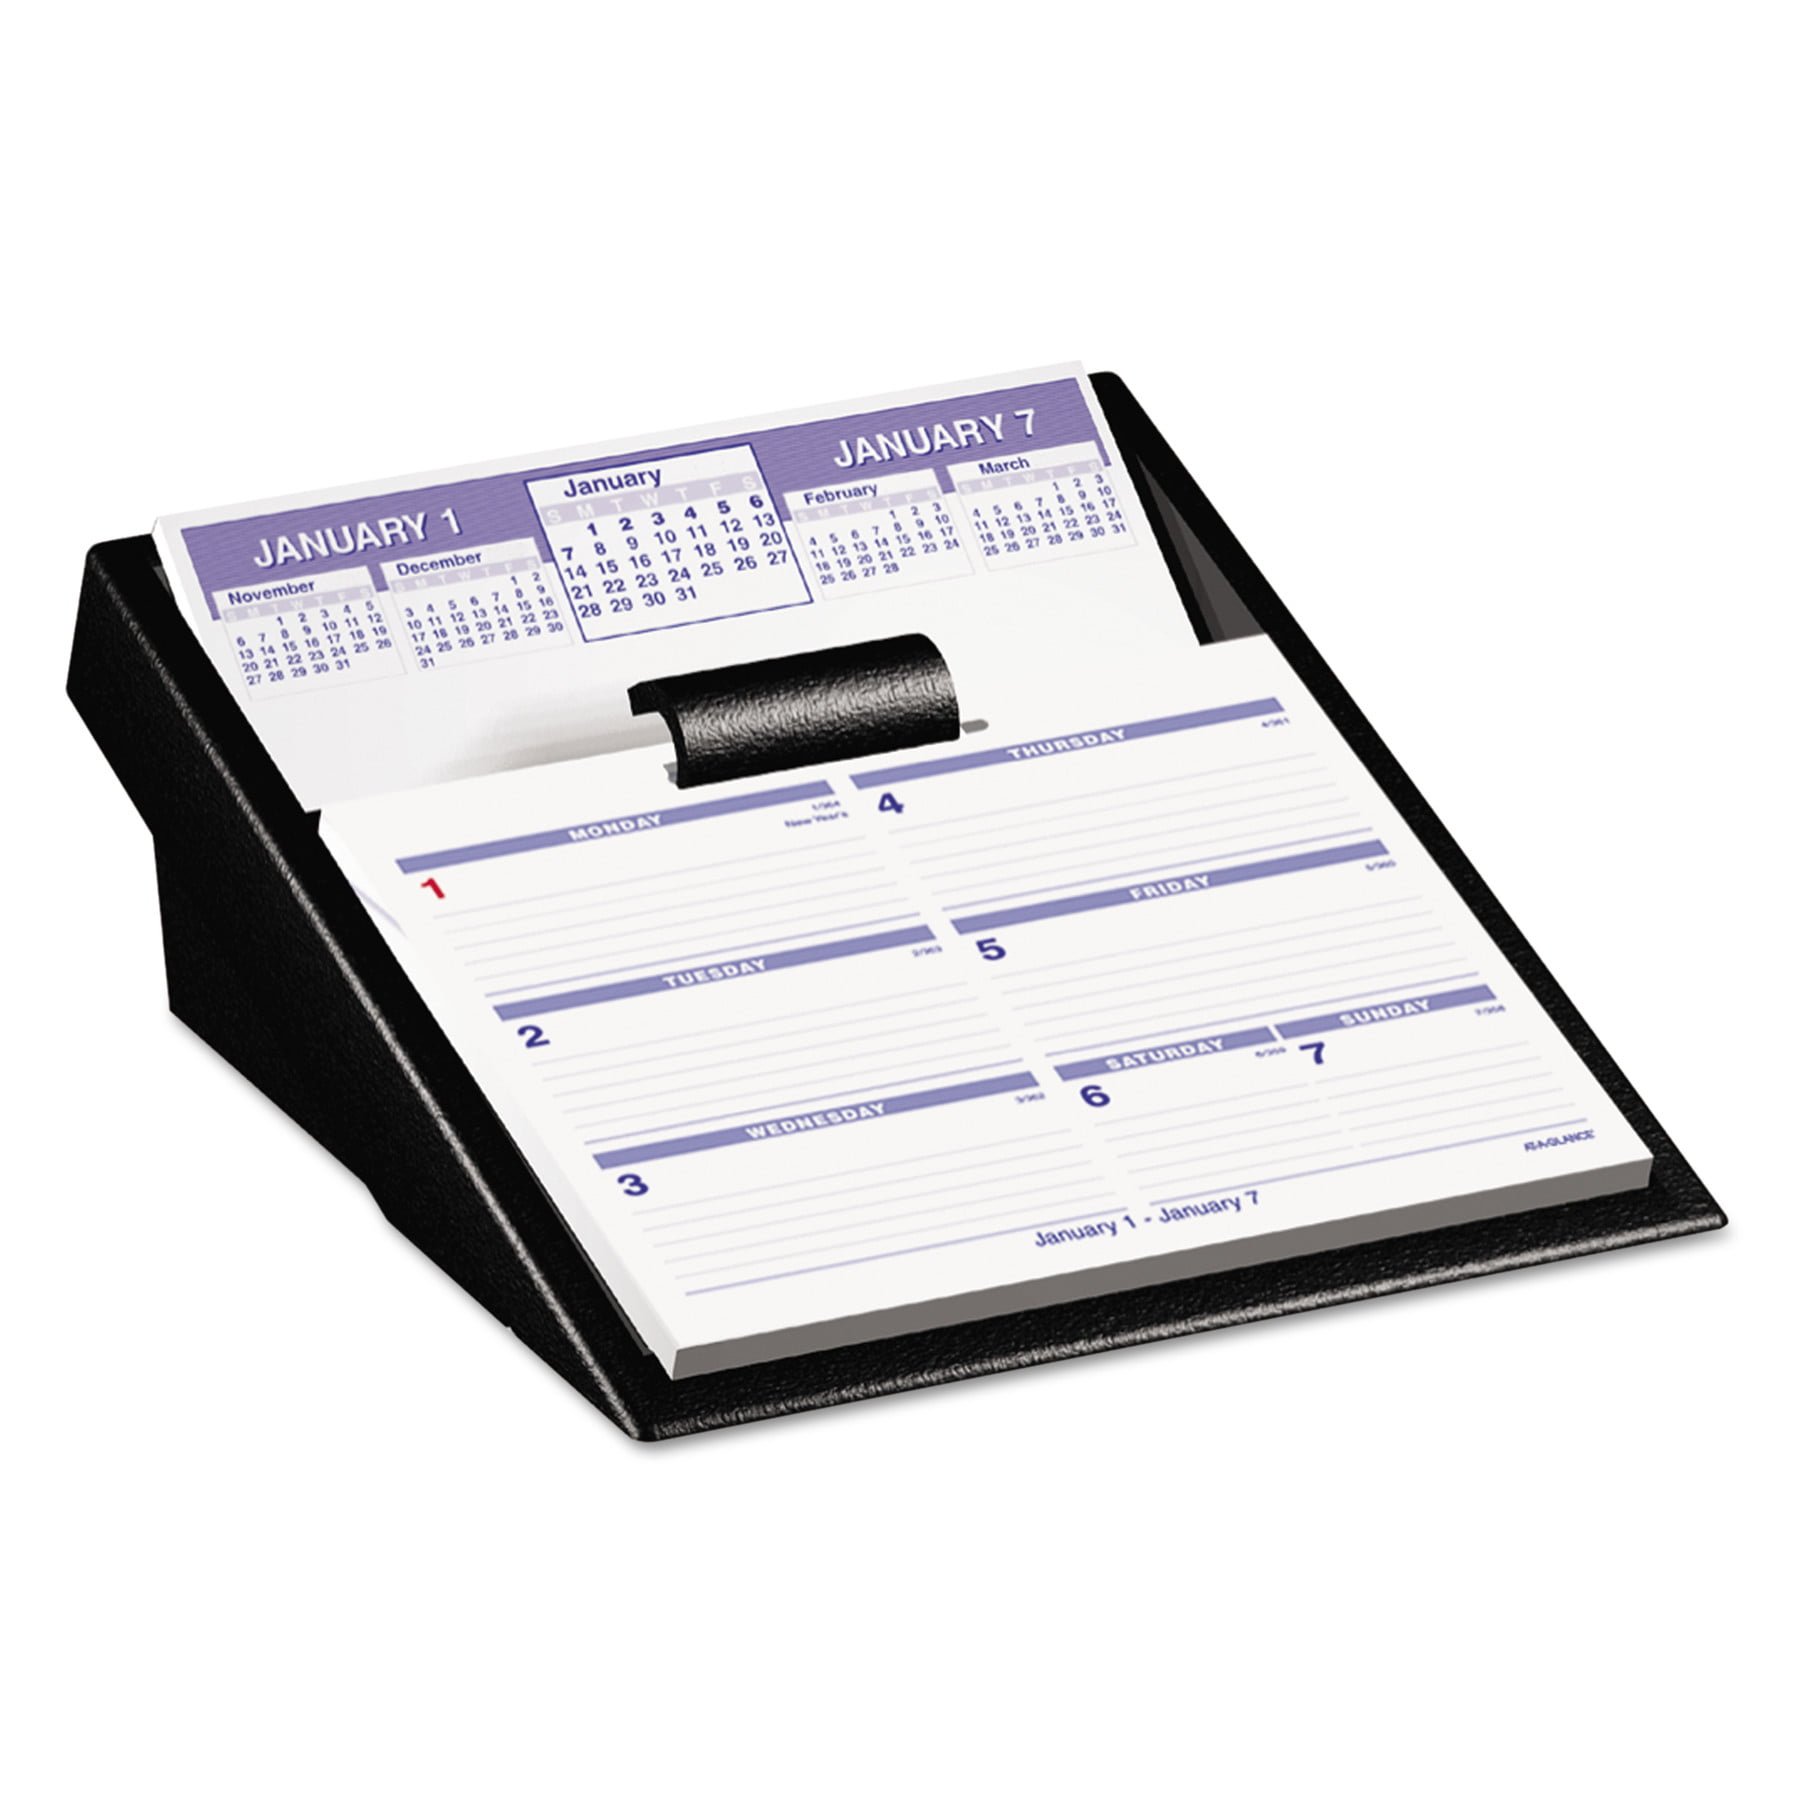 ATAGLANCE FlipAWeek Desk Calendar and Base, 5 5/8 x 7, White, 2018